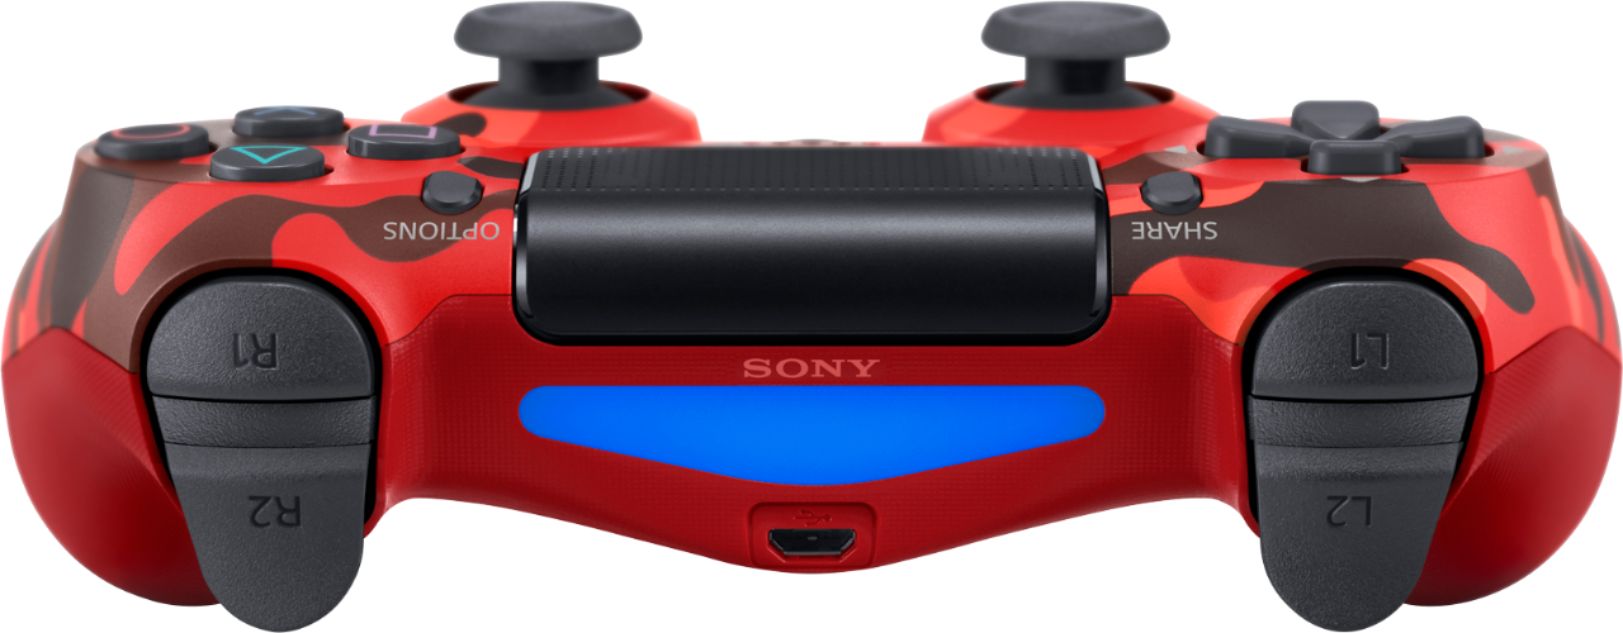 sony dualshock 4 red camo wireless controller